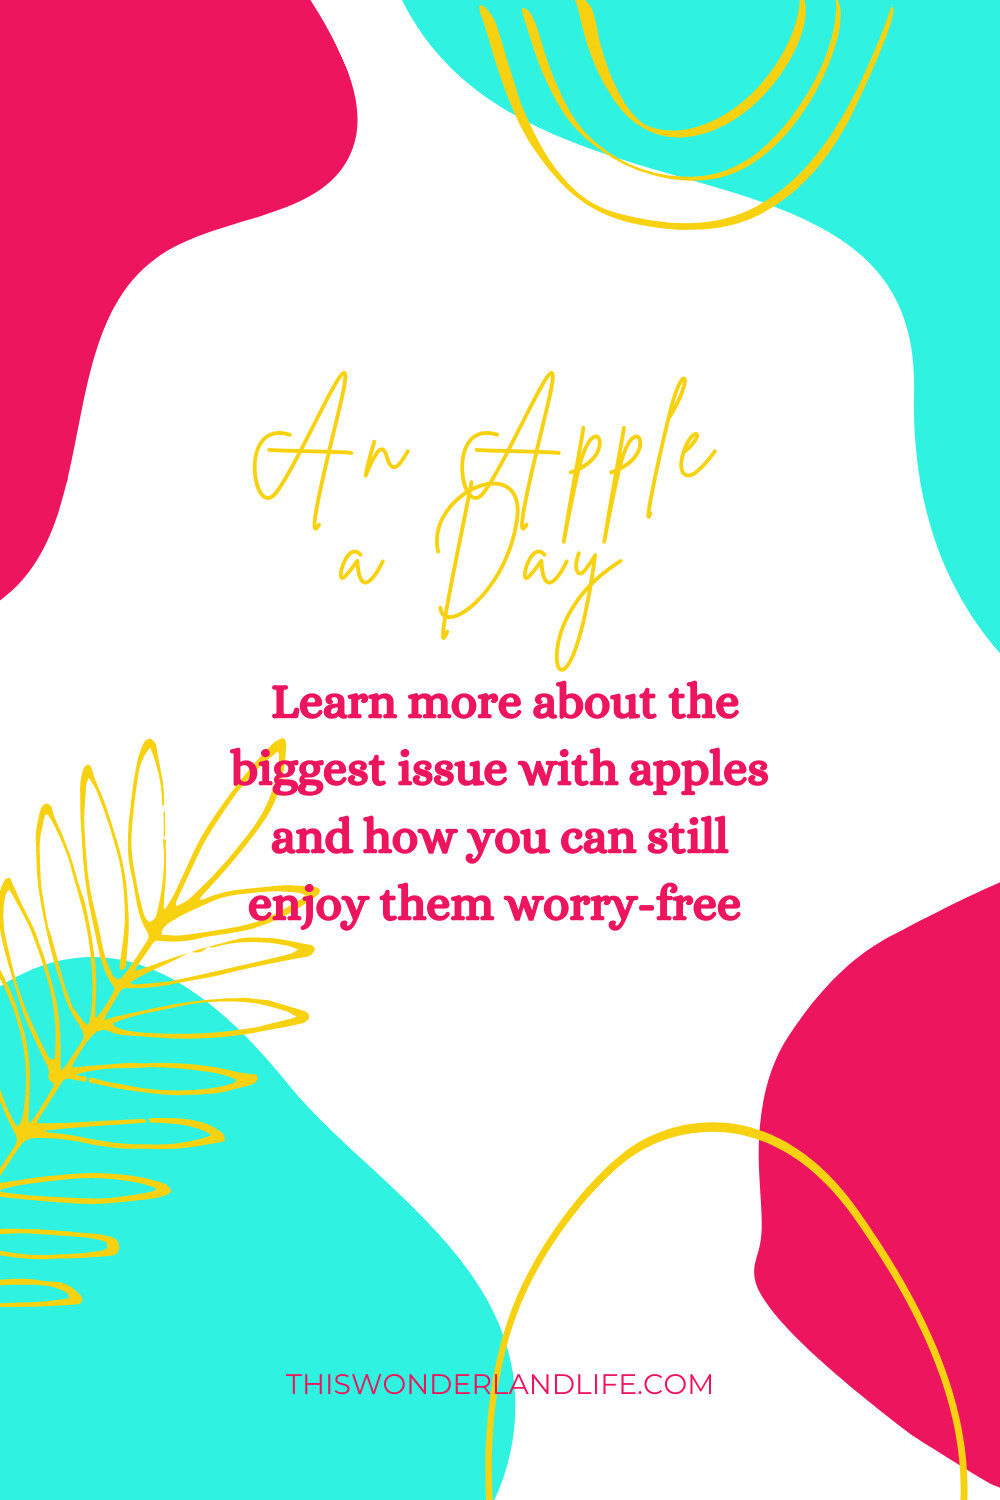 An Apple a Day... 